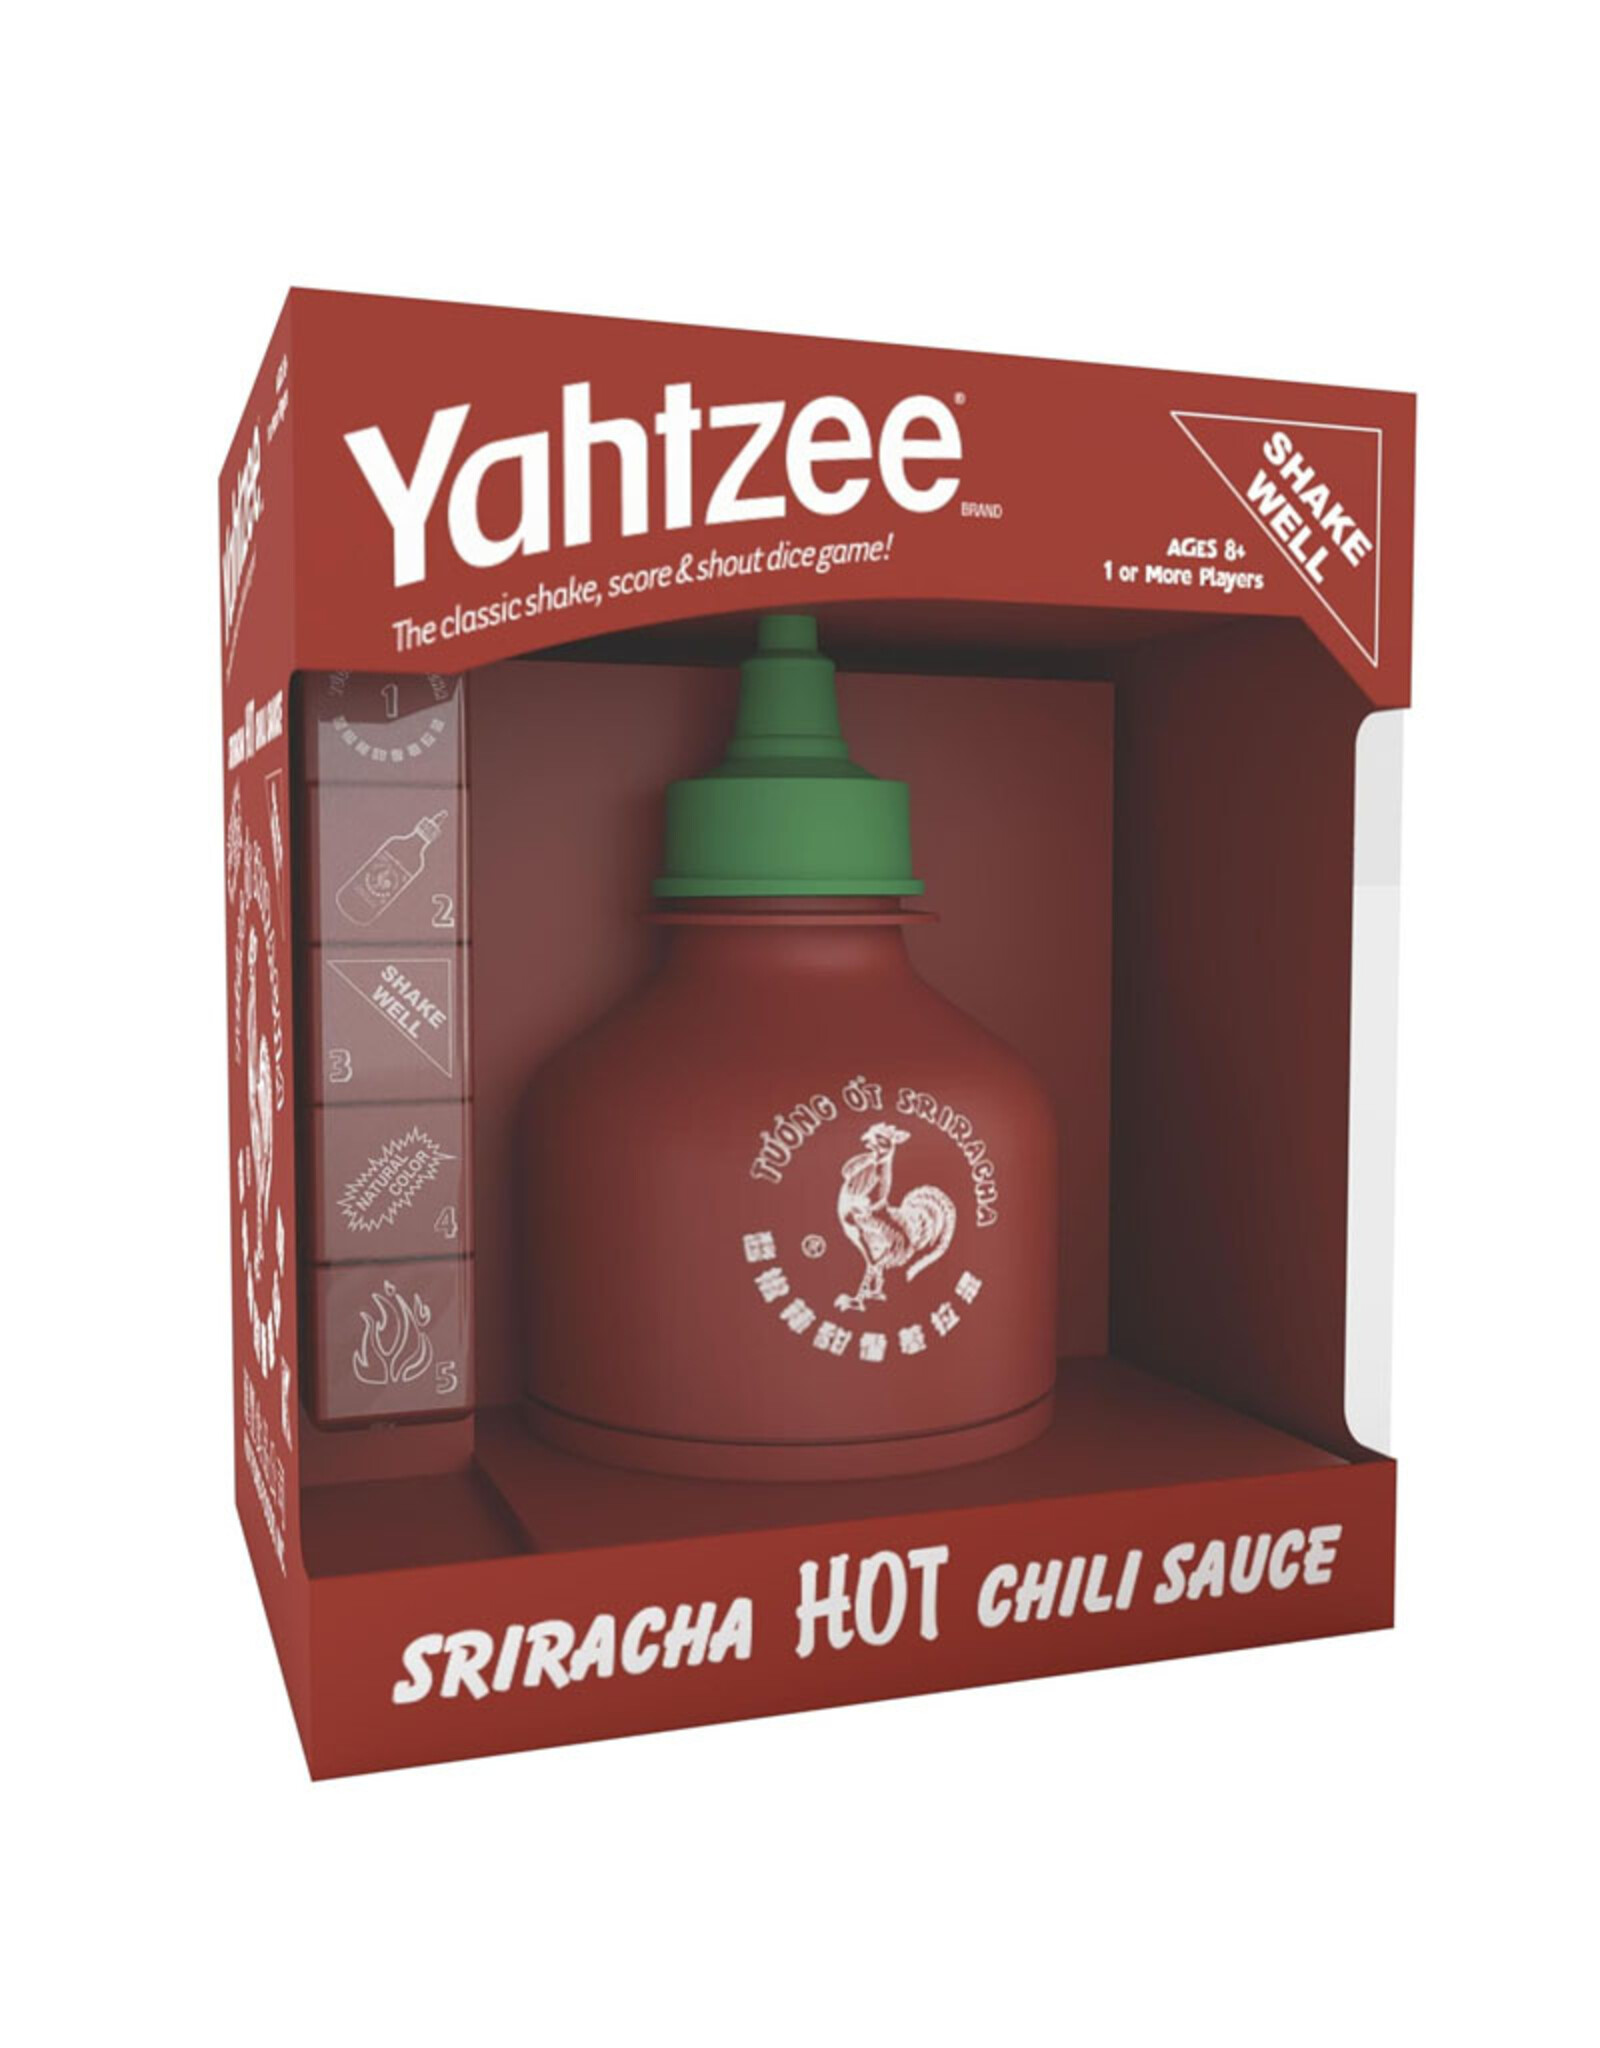 Usaopoly Yahtzee Sriracha